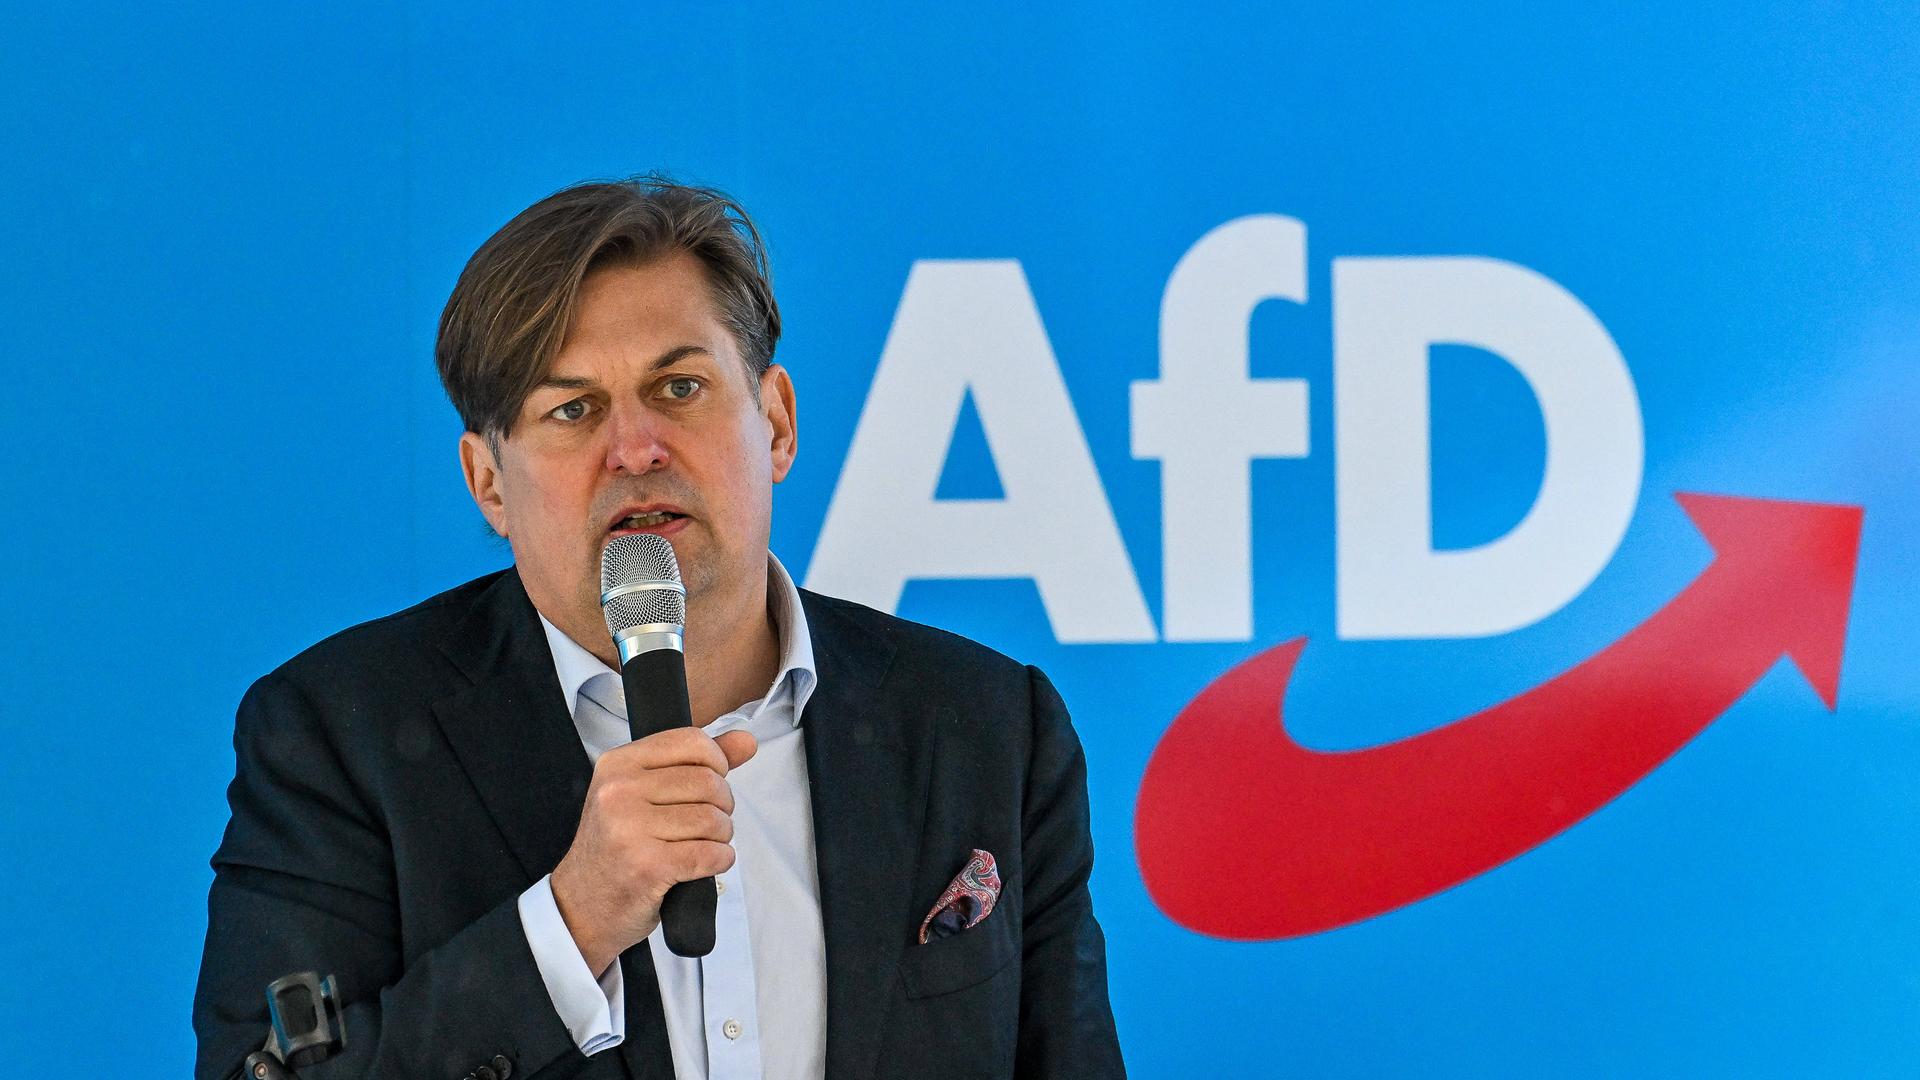 Wahlkampfveranstaltung von AfD-Spitzenkandidat Maximilian Krah am 21.5. in Kaufbeuren